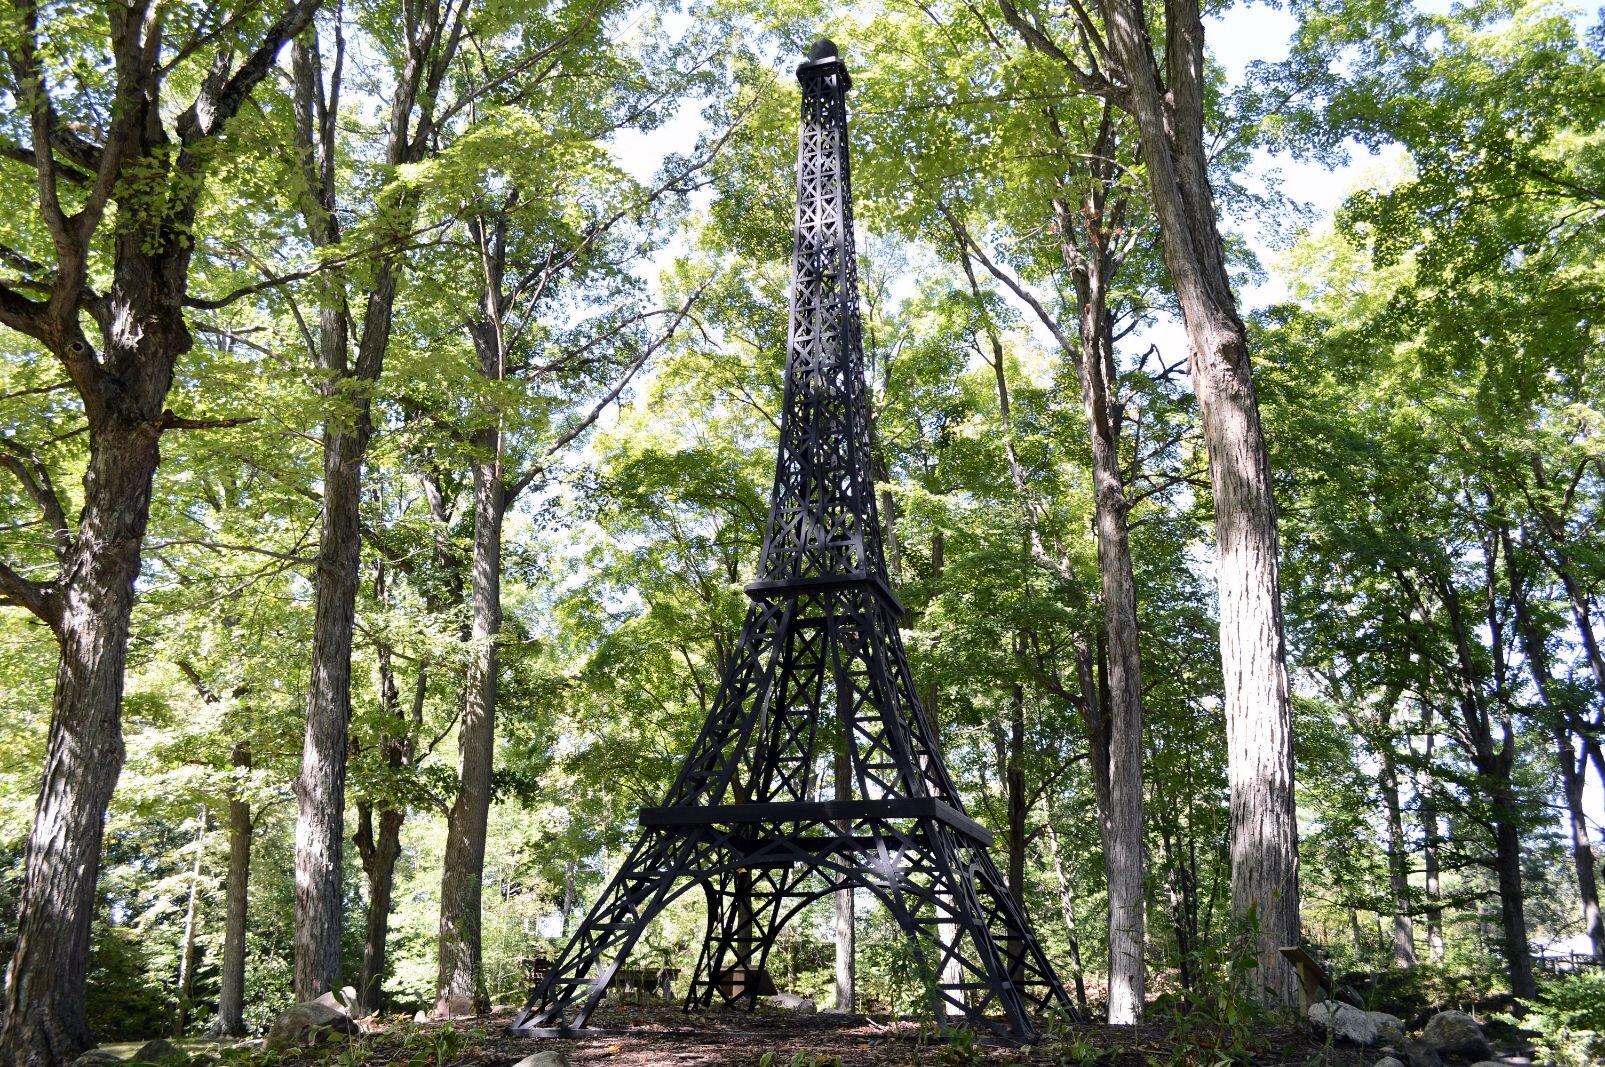 The Eiffel Tower of Paris, Michigan.